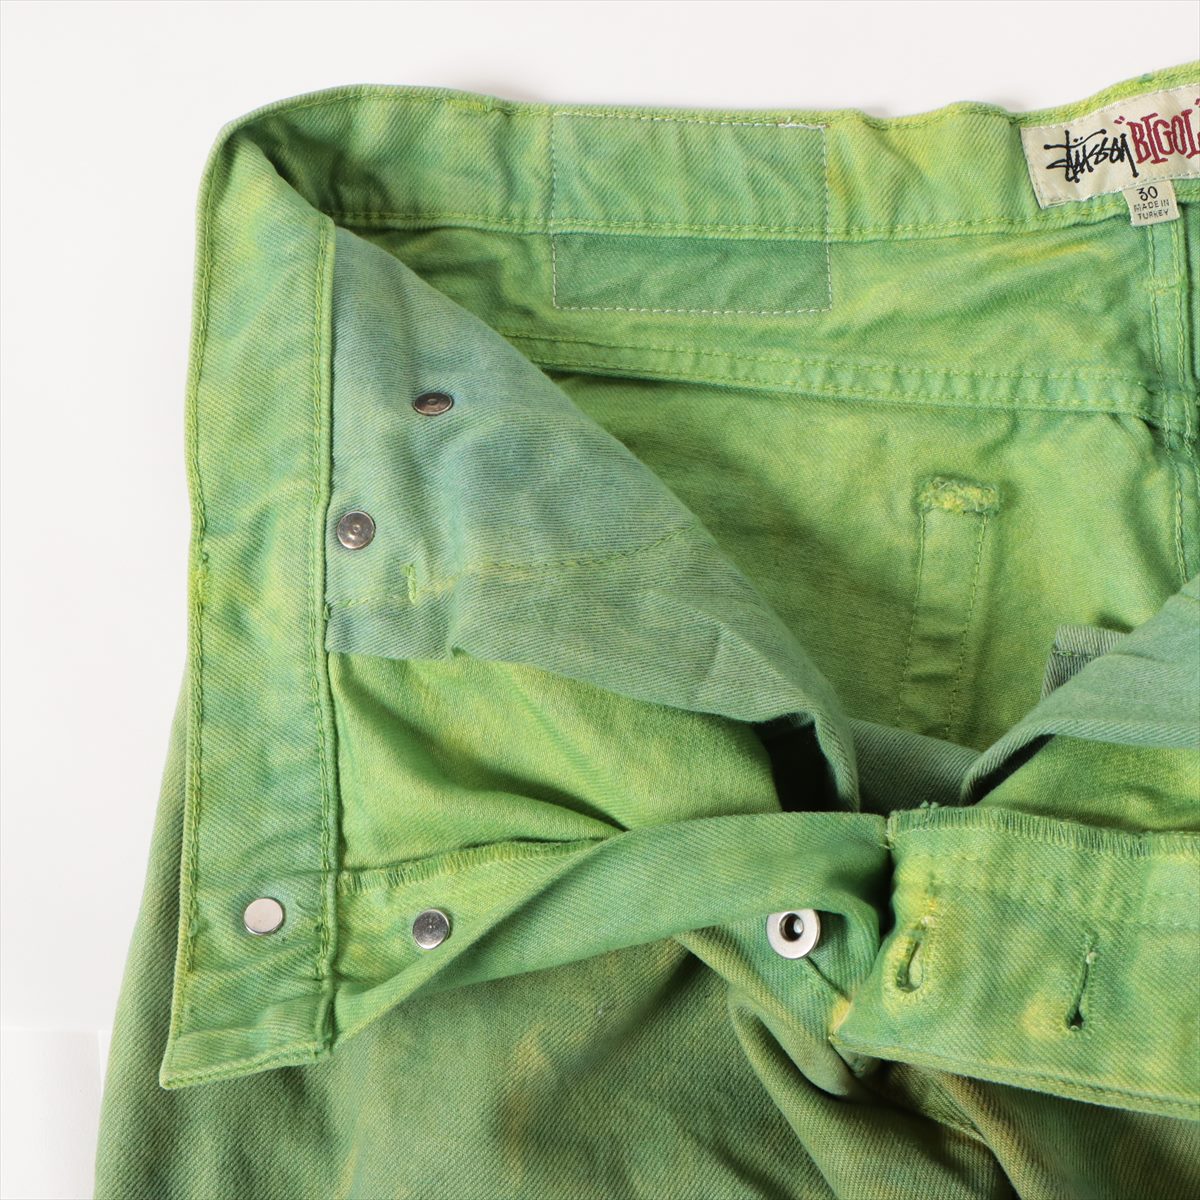 Stüssy Cotton Denim pants 30 Men's Green  WONDERLAND HAND-DYED BIG OL' JEANS